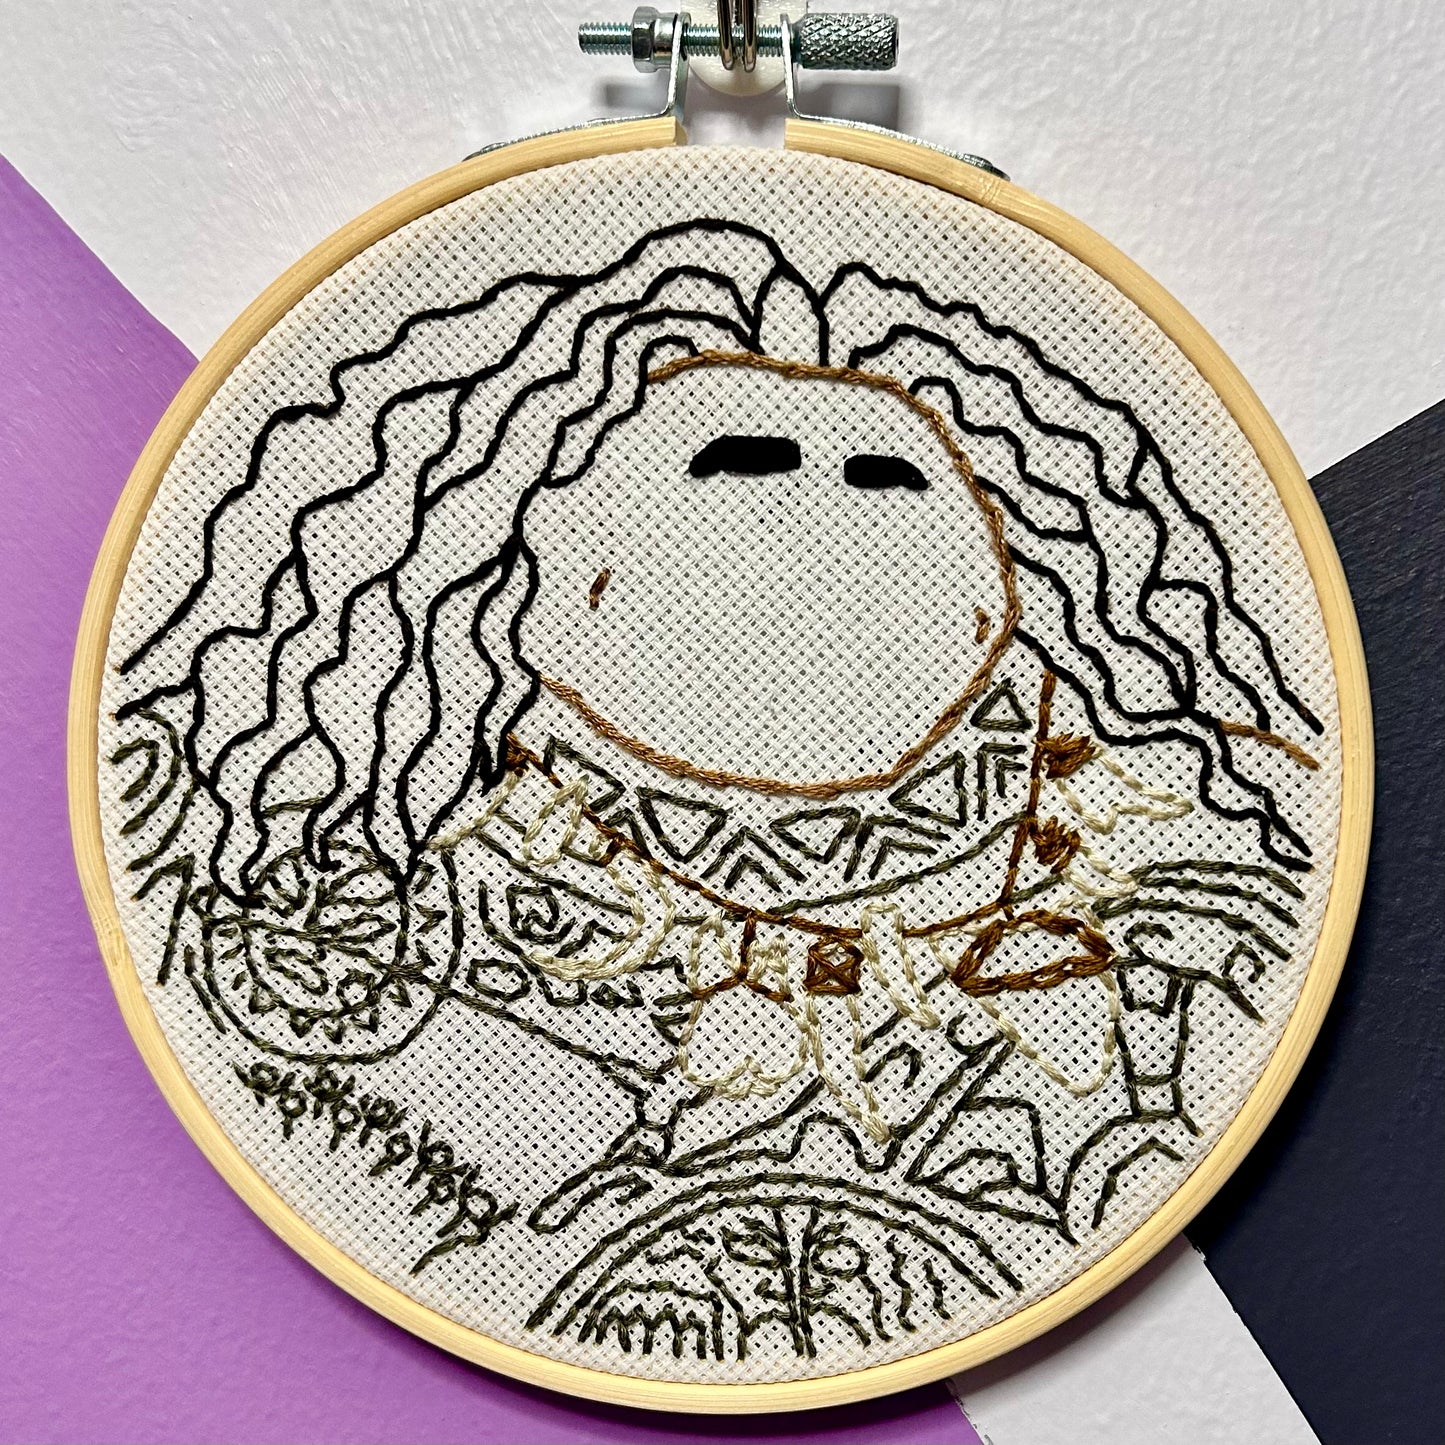 Moana embroidery